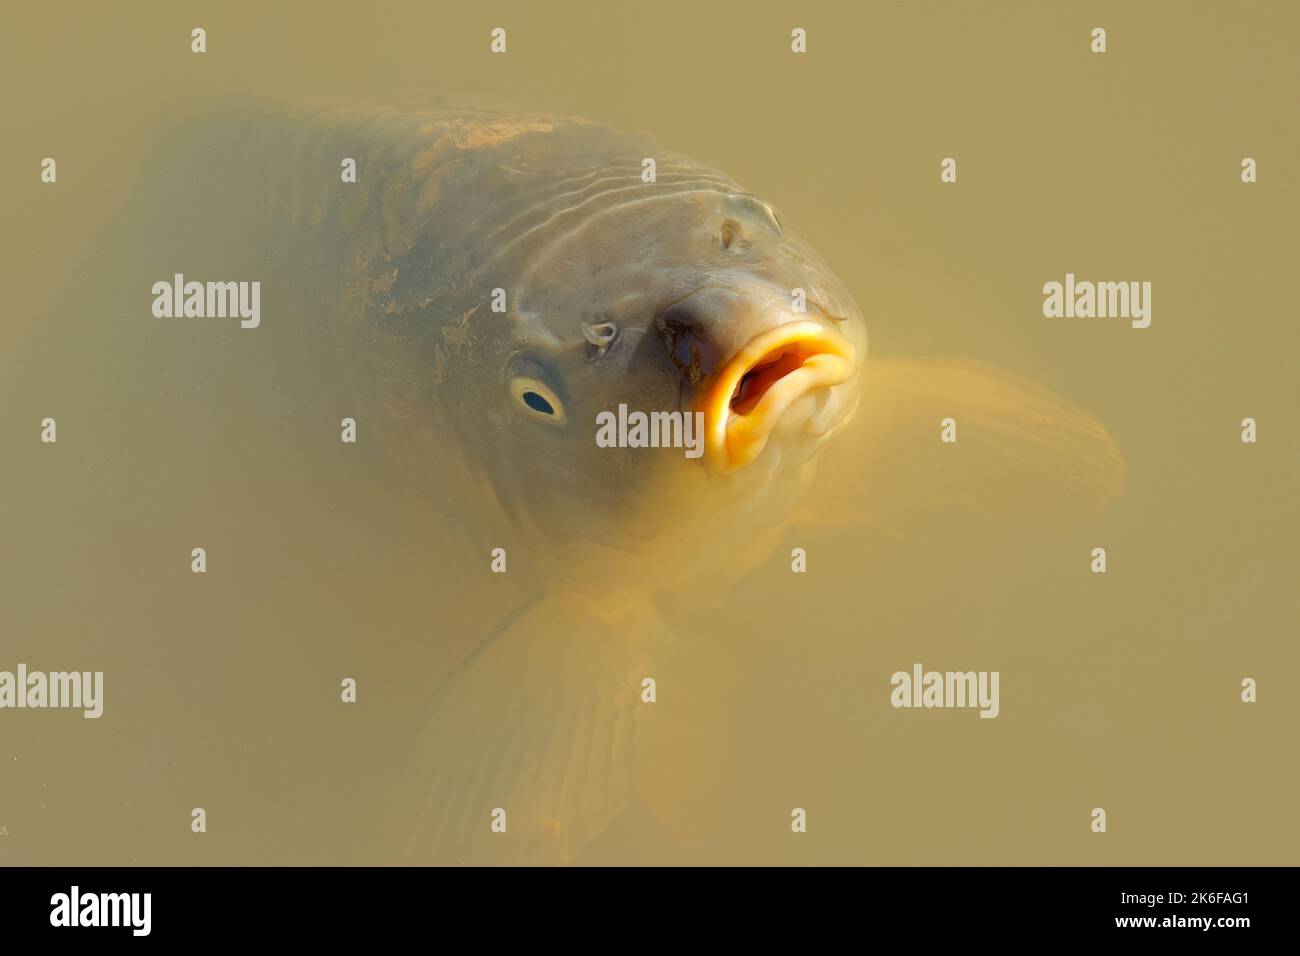 Common carp (cyprinus carpio) hi-res stock photography and images - Alamy